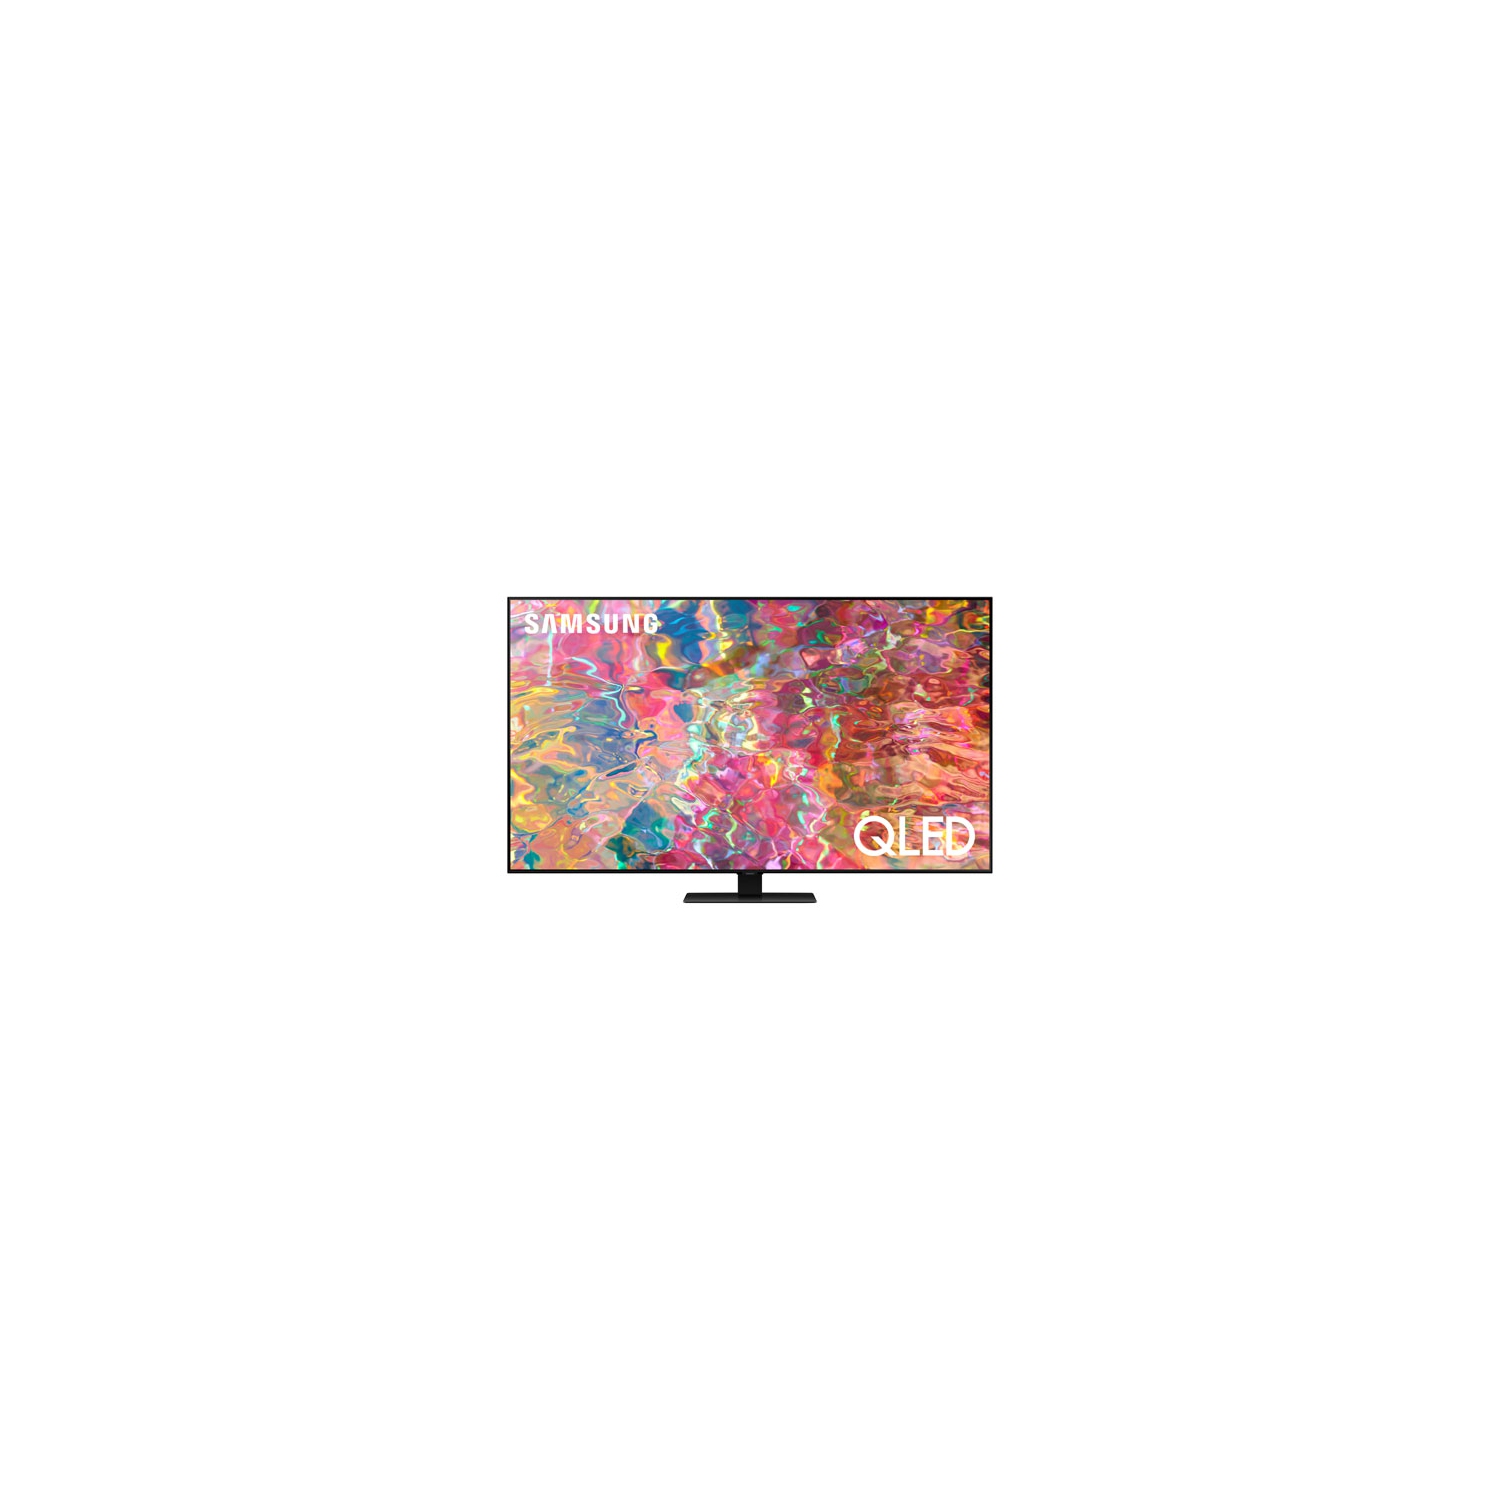 Samsung 55" OPEN BOX QLED 4K Smart TV Q80B (QN55Q80BAFXZC) 10/10 Condition With One Year Samsung Warranty